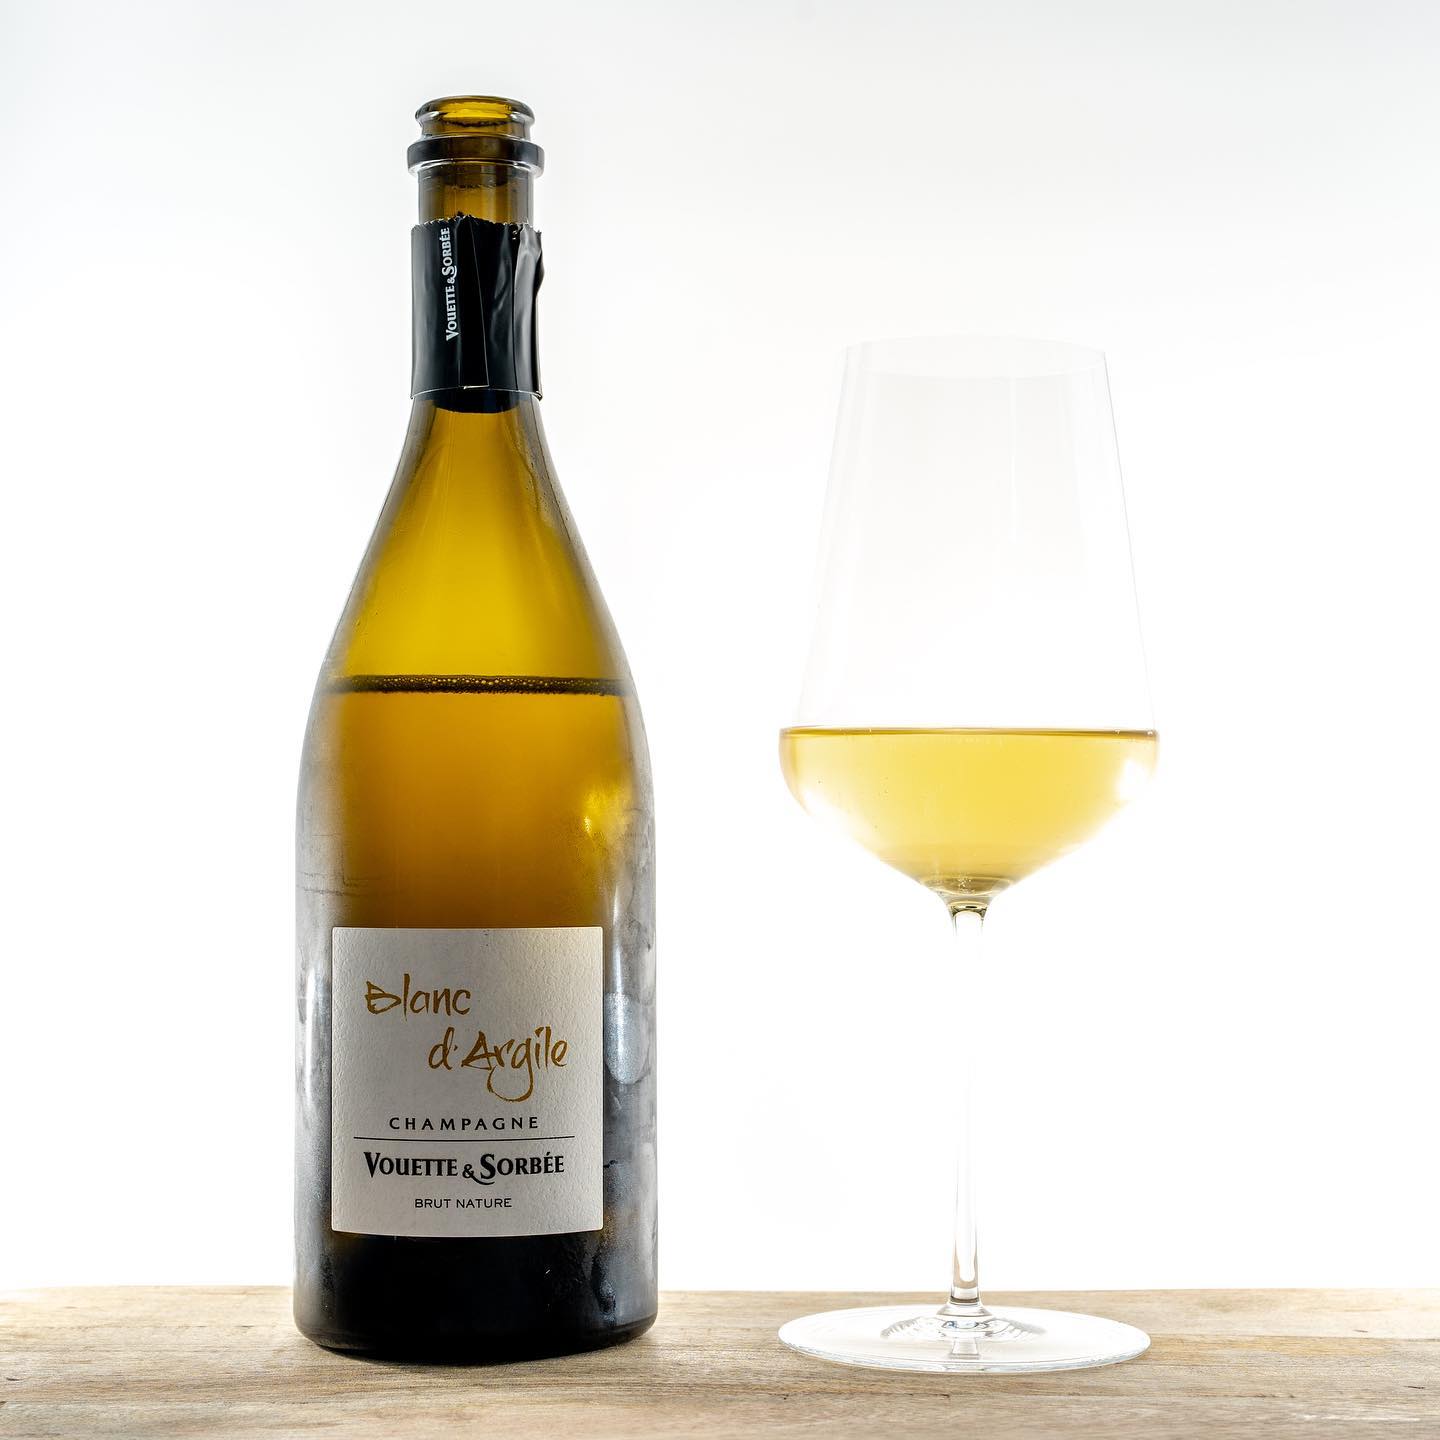 Vouette et Sorbée, Champagne Blanc d’Argile 2017 @heloise.v.s @bolomeywijnimport 

🍇 Chardonnay

#champagne #vouetteetsorbee #chardonnay #blancdargile #brutnature #wineoftheday #wineoclock #winelover